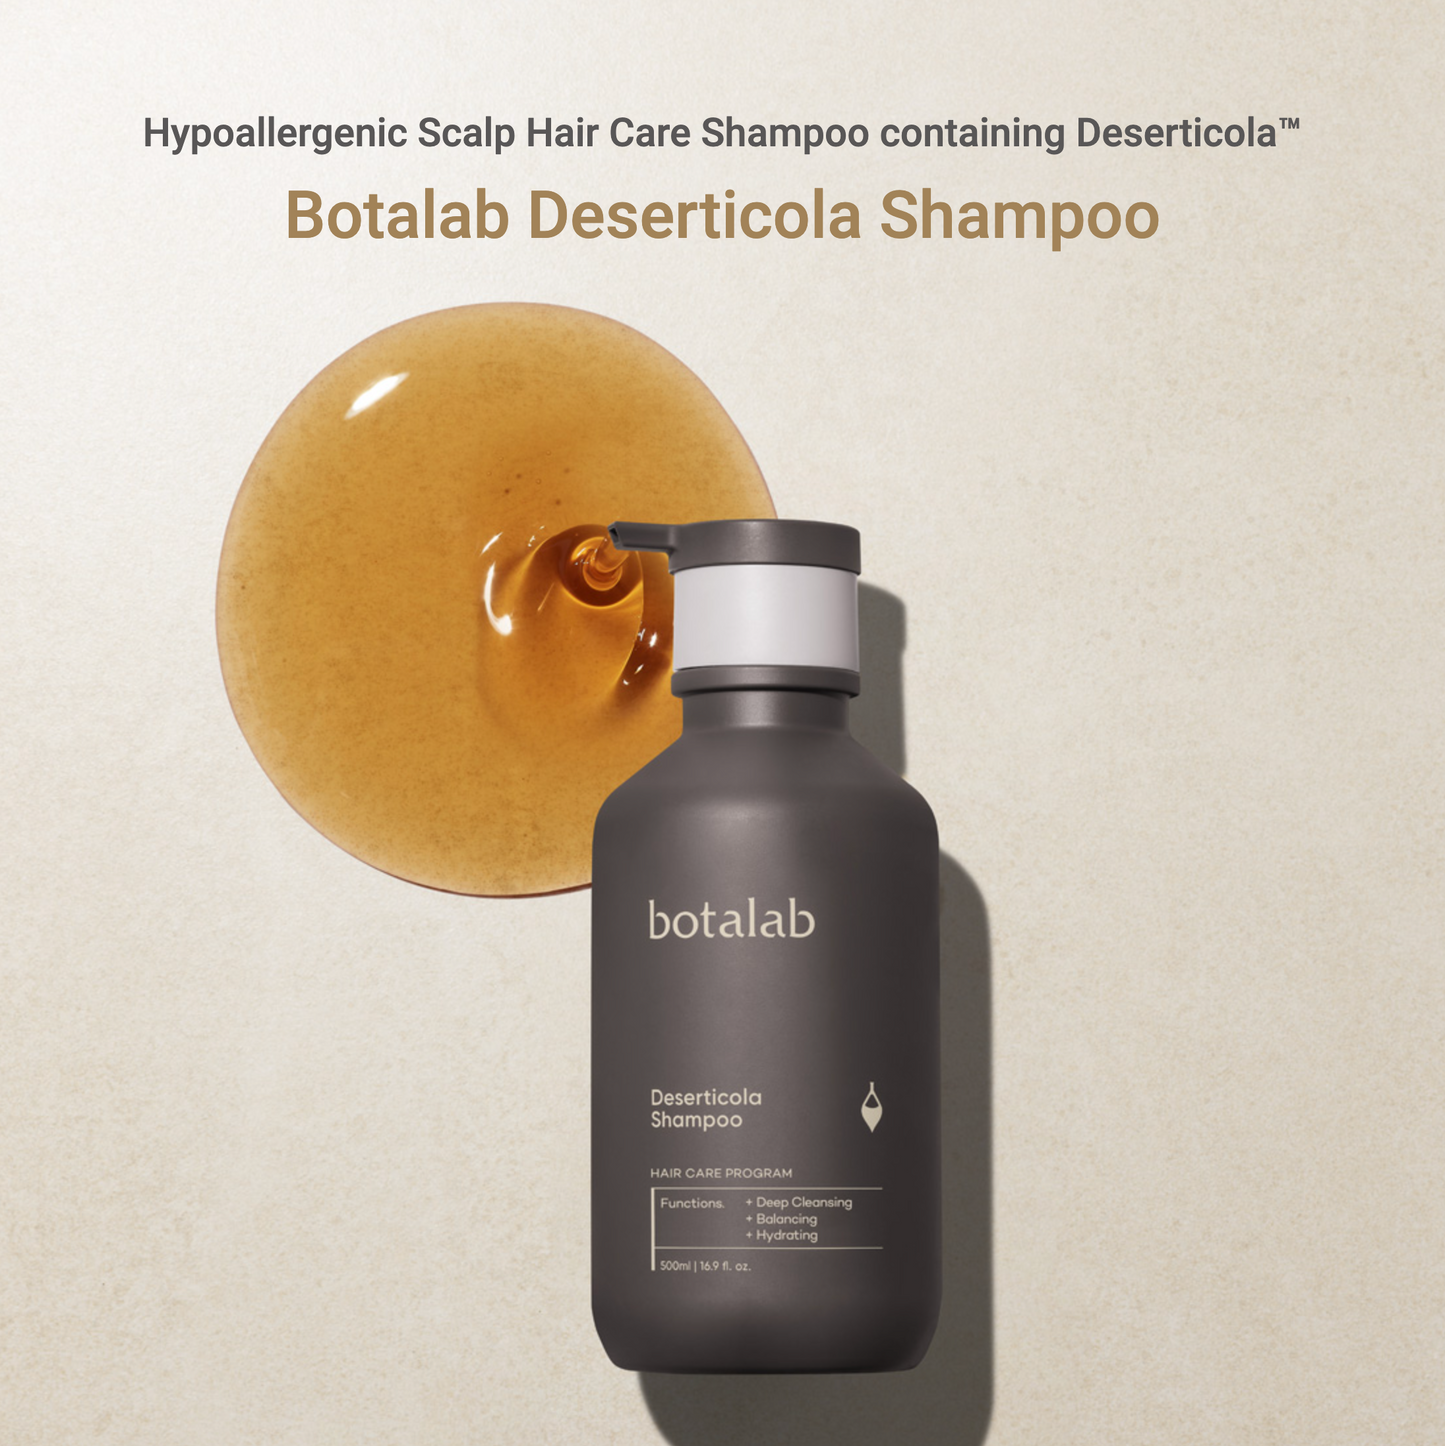 BotaLab Deserticola Shampoo